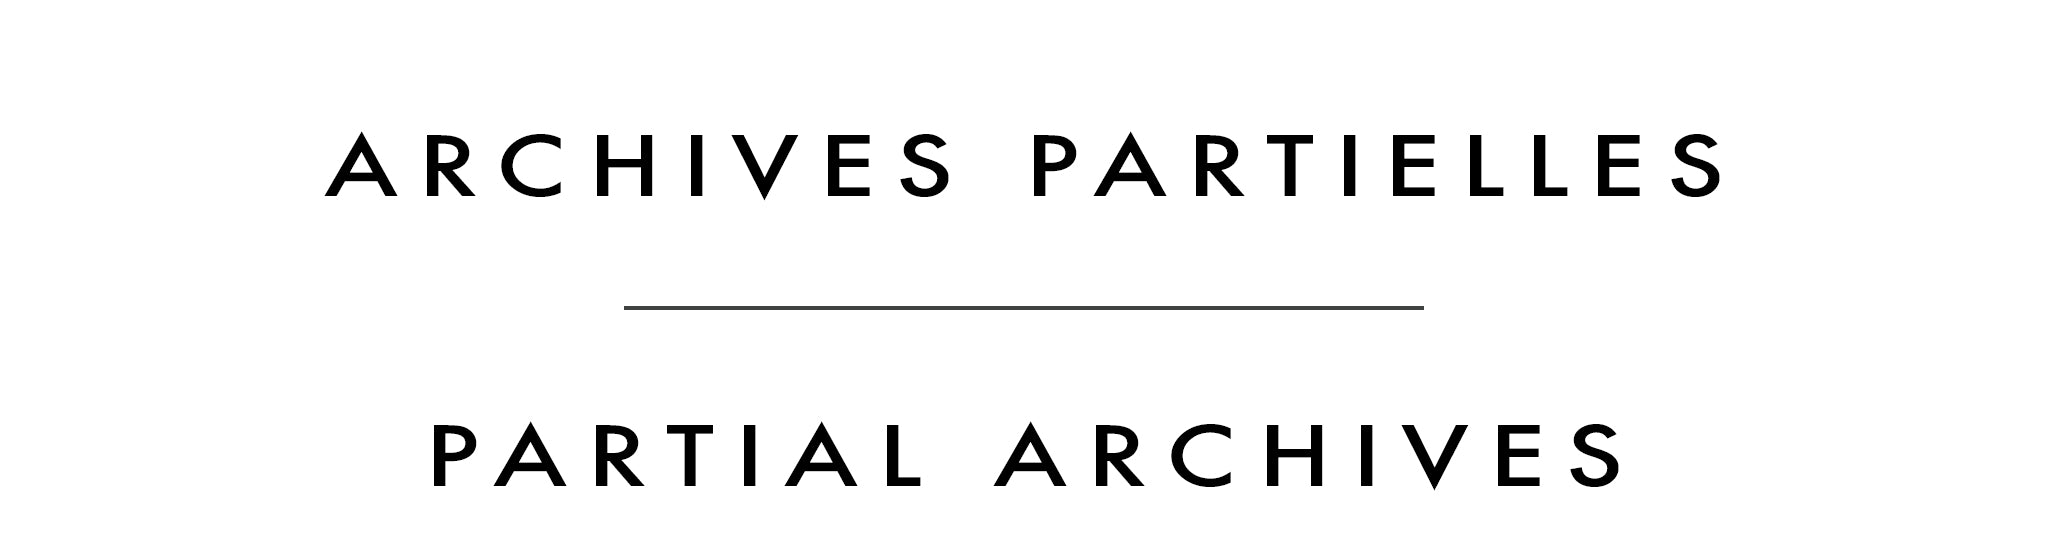 Archives partielles | Partial Archives | Kimberly Kiel